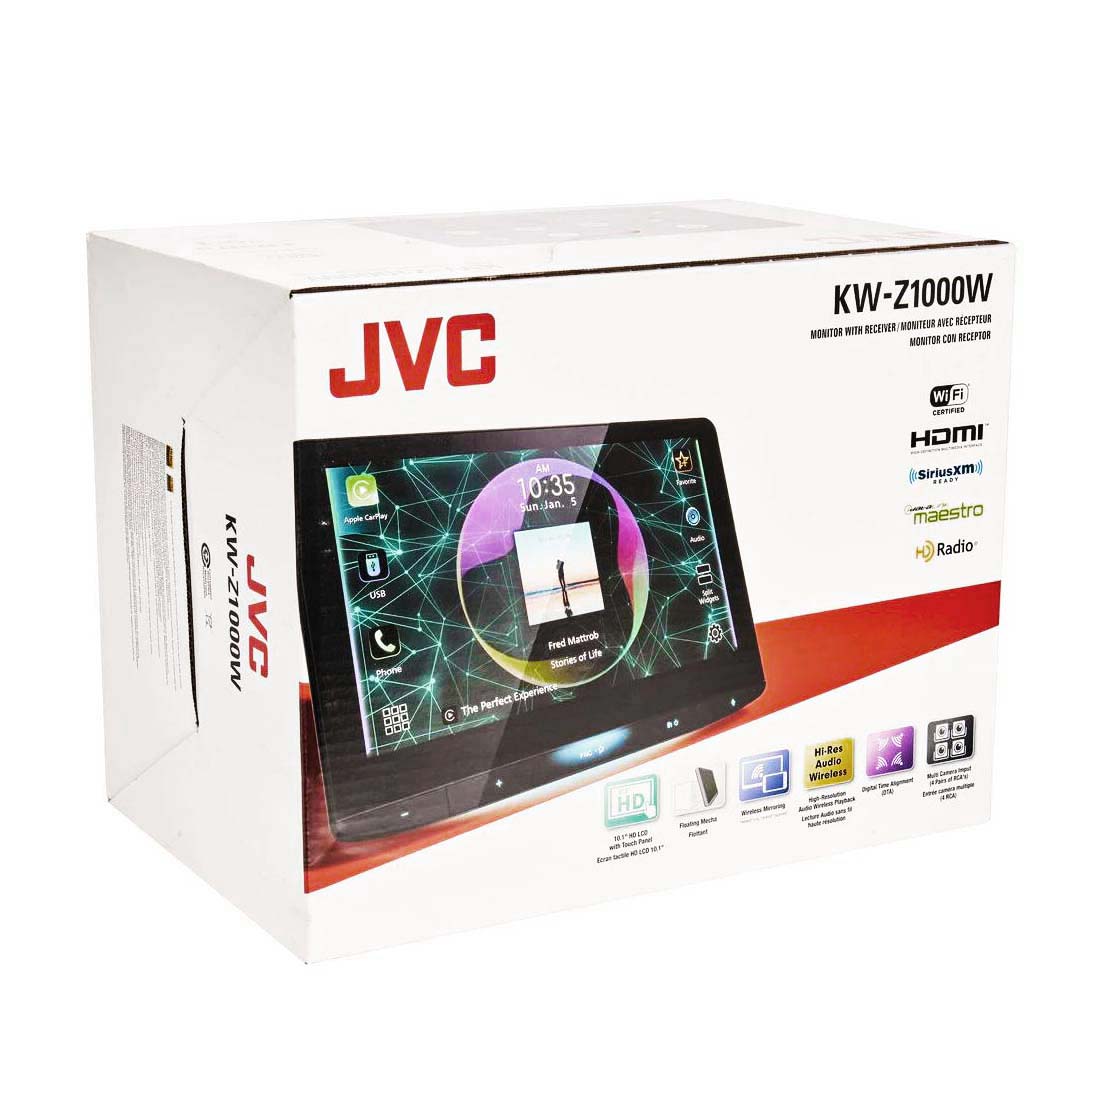 JVC KW-Z1000W 2-DIN 10.1" Floating Touchscreen Mechless Digital Media Receiver